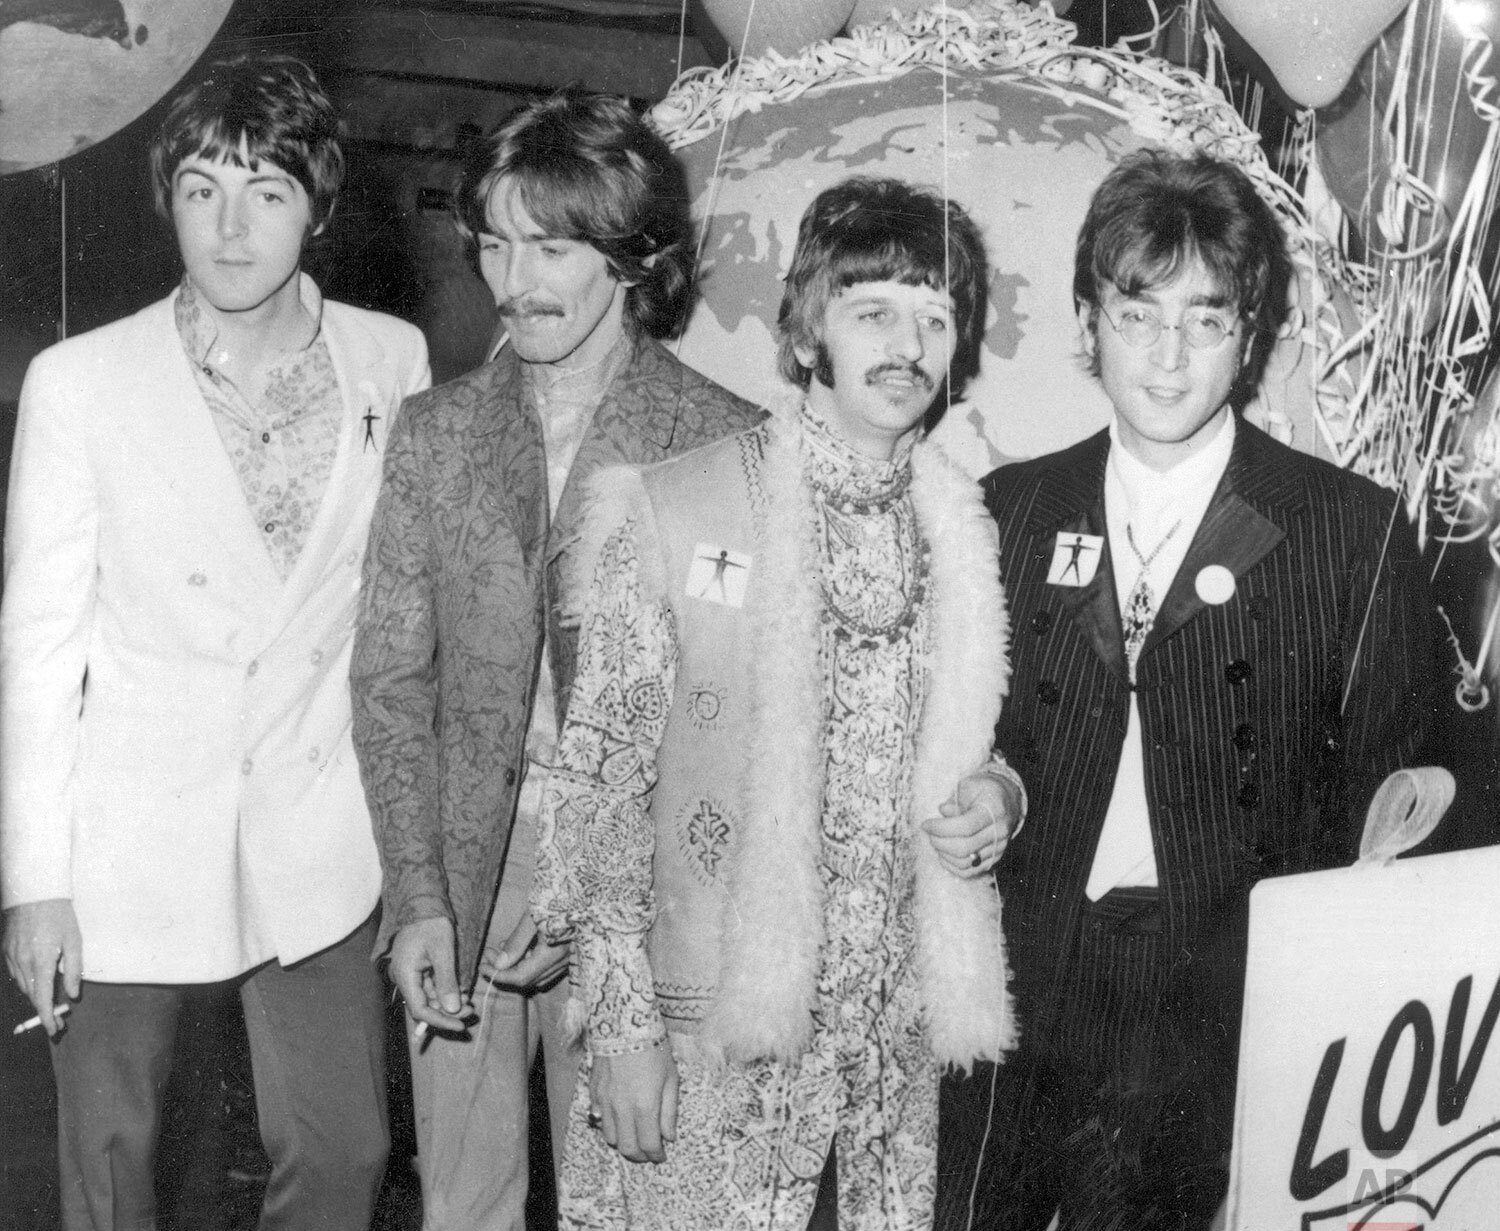  The Beatles, from left, Paul McCartney, George Harrison, Ringo Starr and John Lennon, appear at EMI Studios in London, June 24, 1967. (AP Photo) 